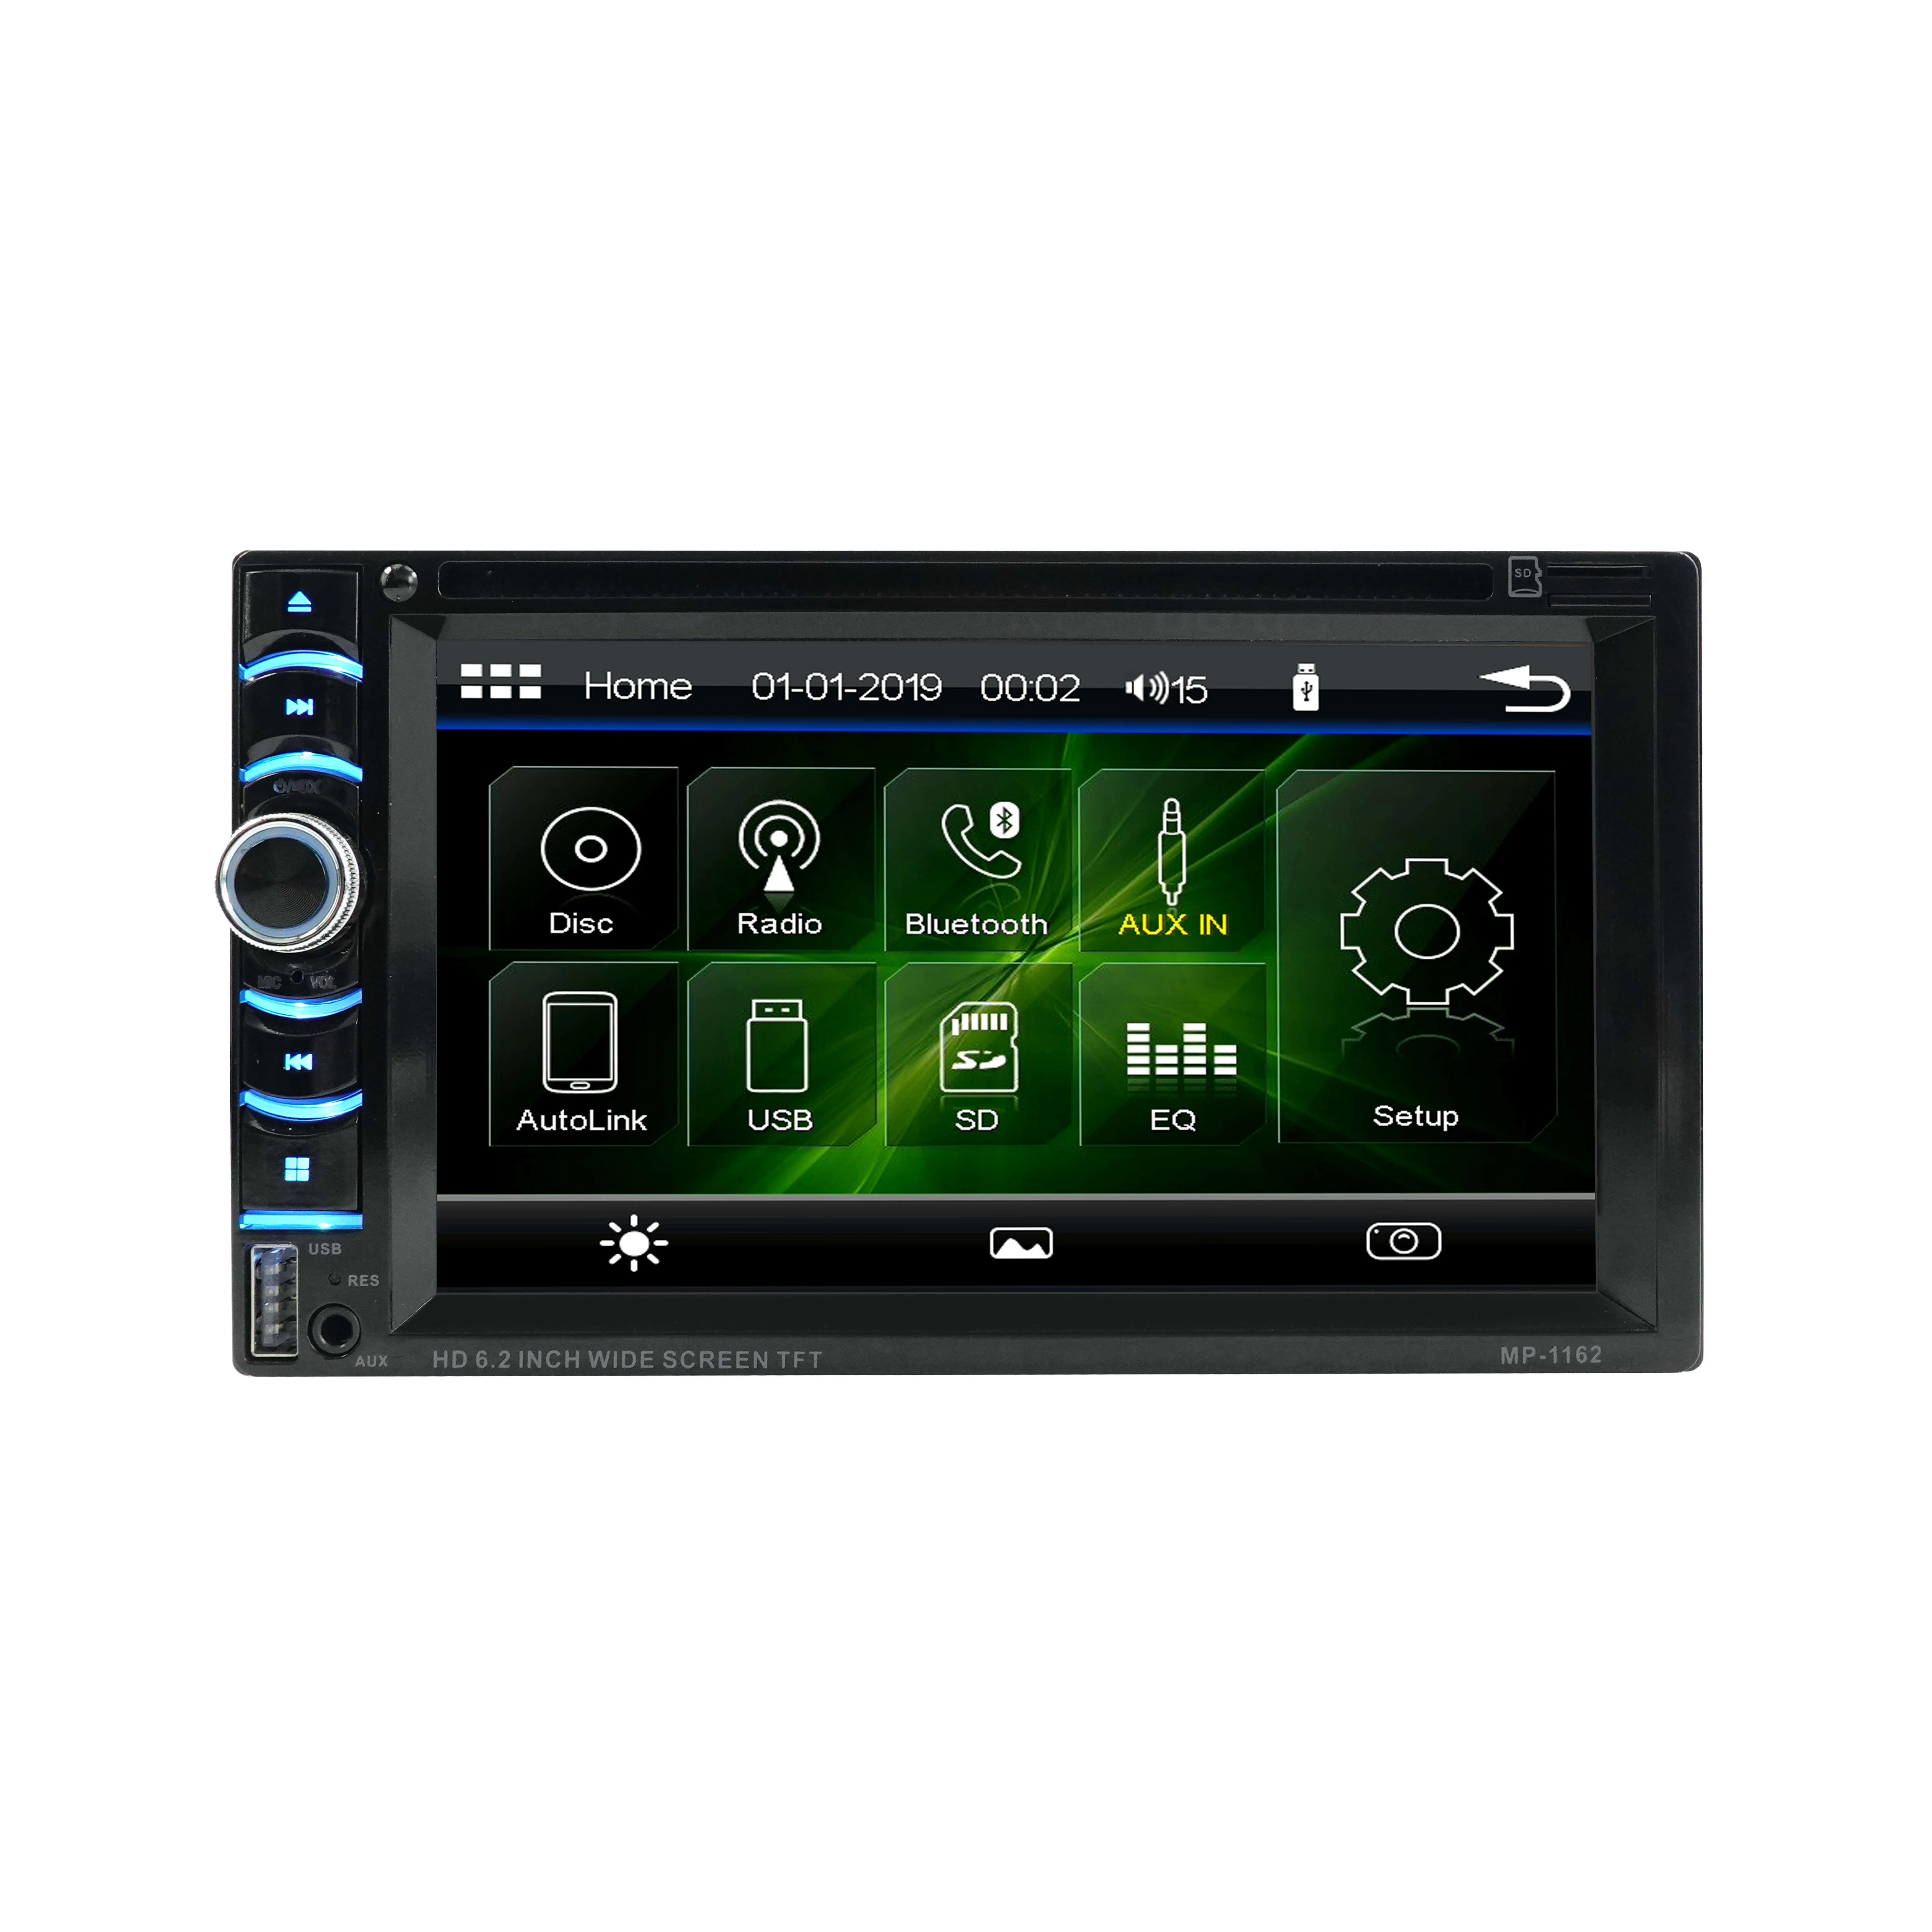 Dual touchscreen radio Dubbel Din auto DVD Bluetooth Audio/handsfree bellen 6,2 inch touchscreen LCD-monitor, MP3-speler, CD, DVD, USB-poort, SD, AUX-ingang, AM/FM-radio-ontvanger